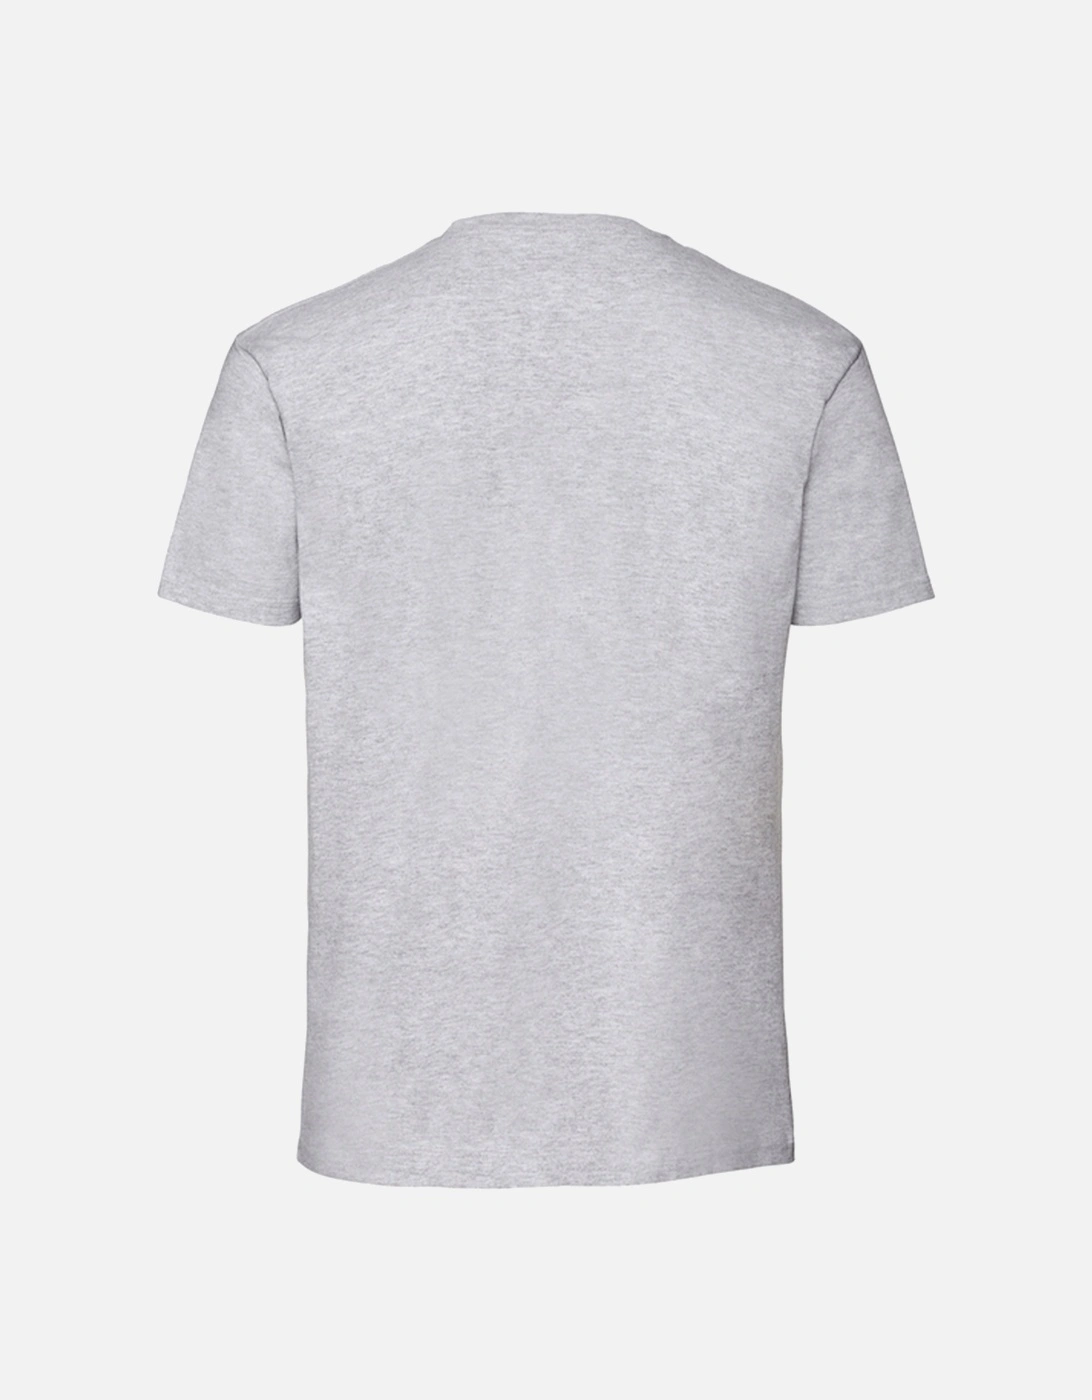 Mens Iconic 195 Premium Ringspun Cotton T-Shirt